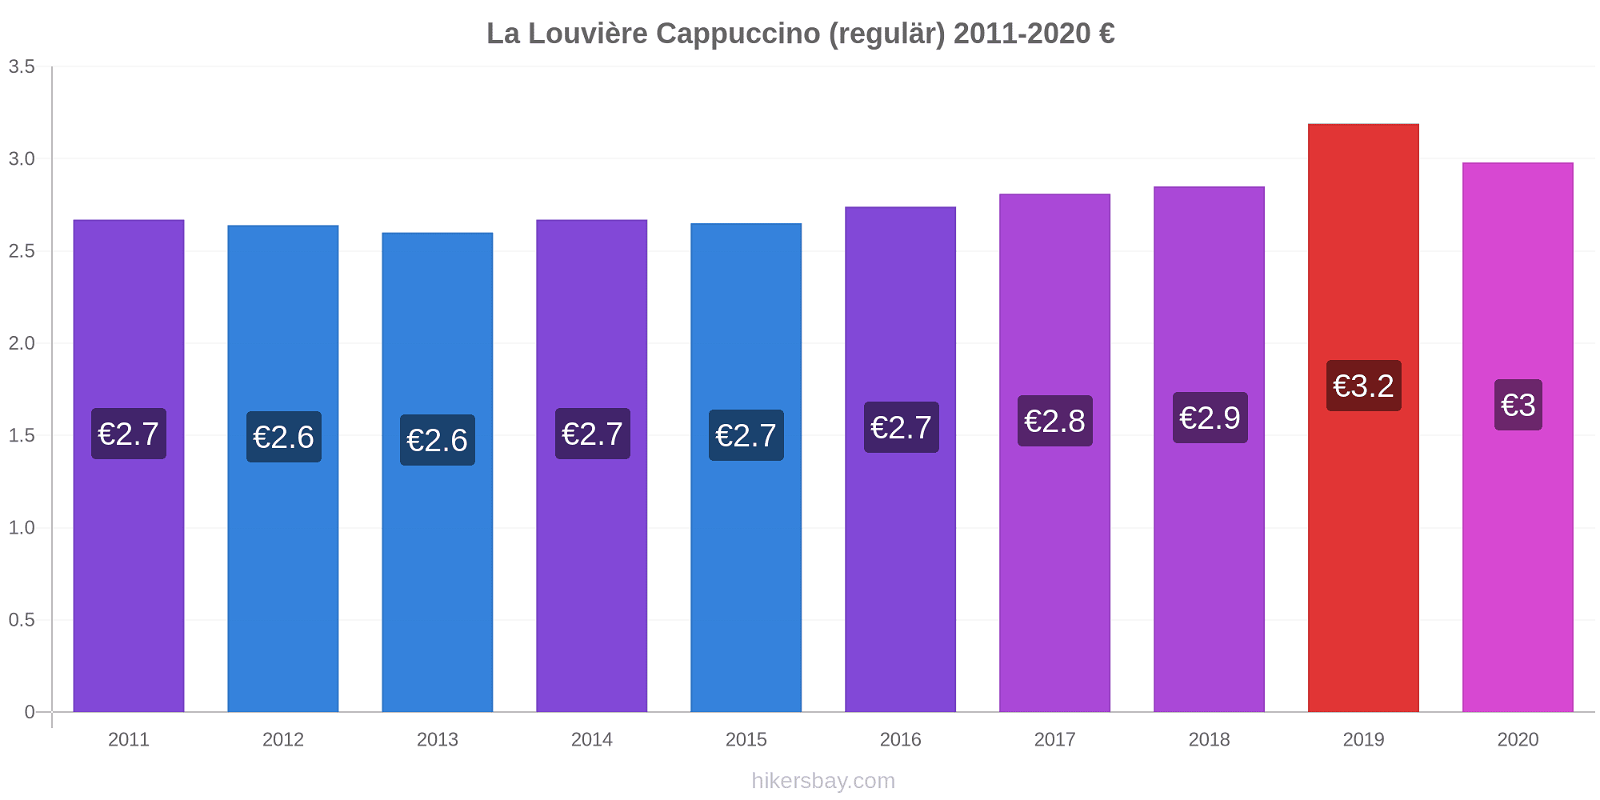 La Louvière Preisänderungen Cappuccino (regulär) hikersbay.com